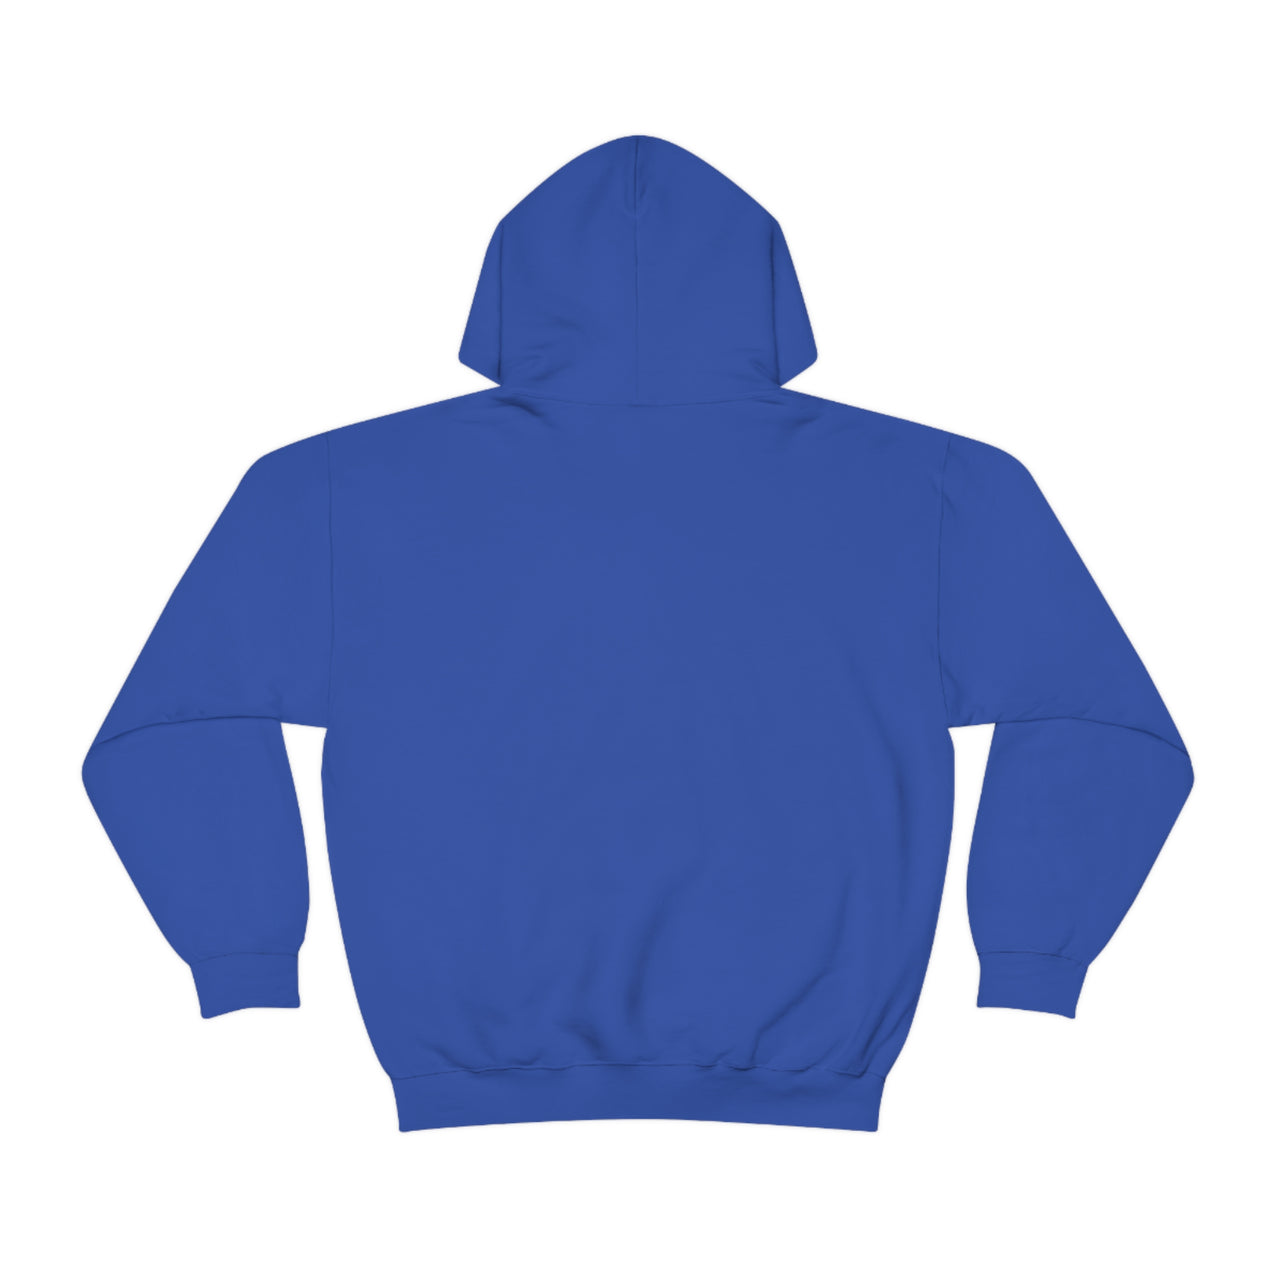 Arsenal Unisex Hooded Sweatshirt